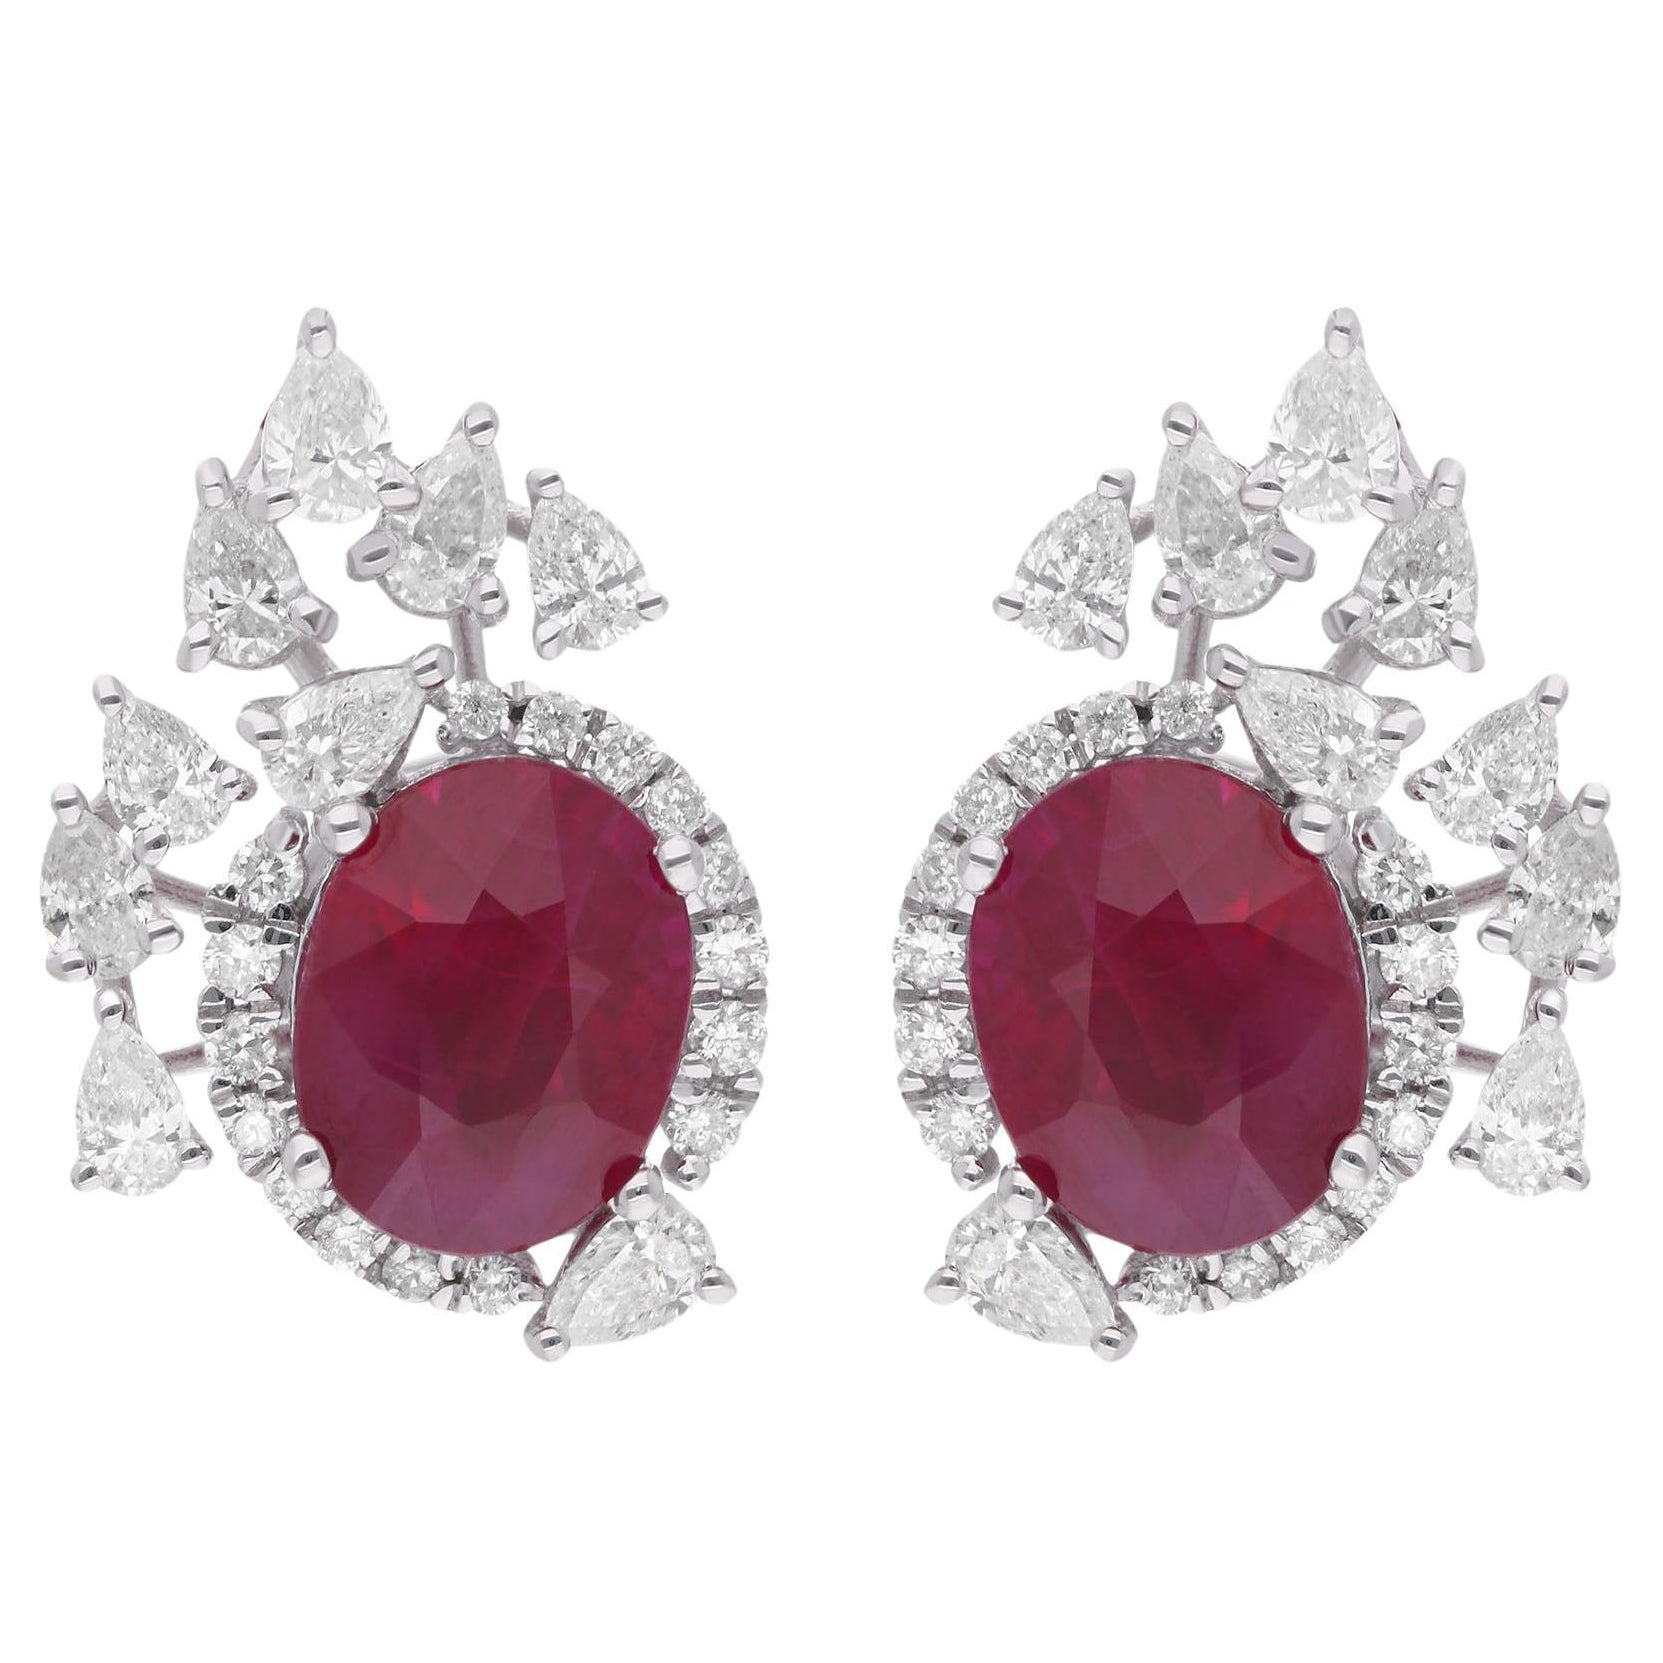 Oval Ruby Gemstone Stud Earrings Diamond 14 Karat White Gold Handmade Jewelry For Sale